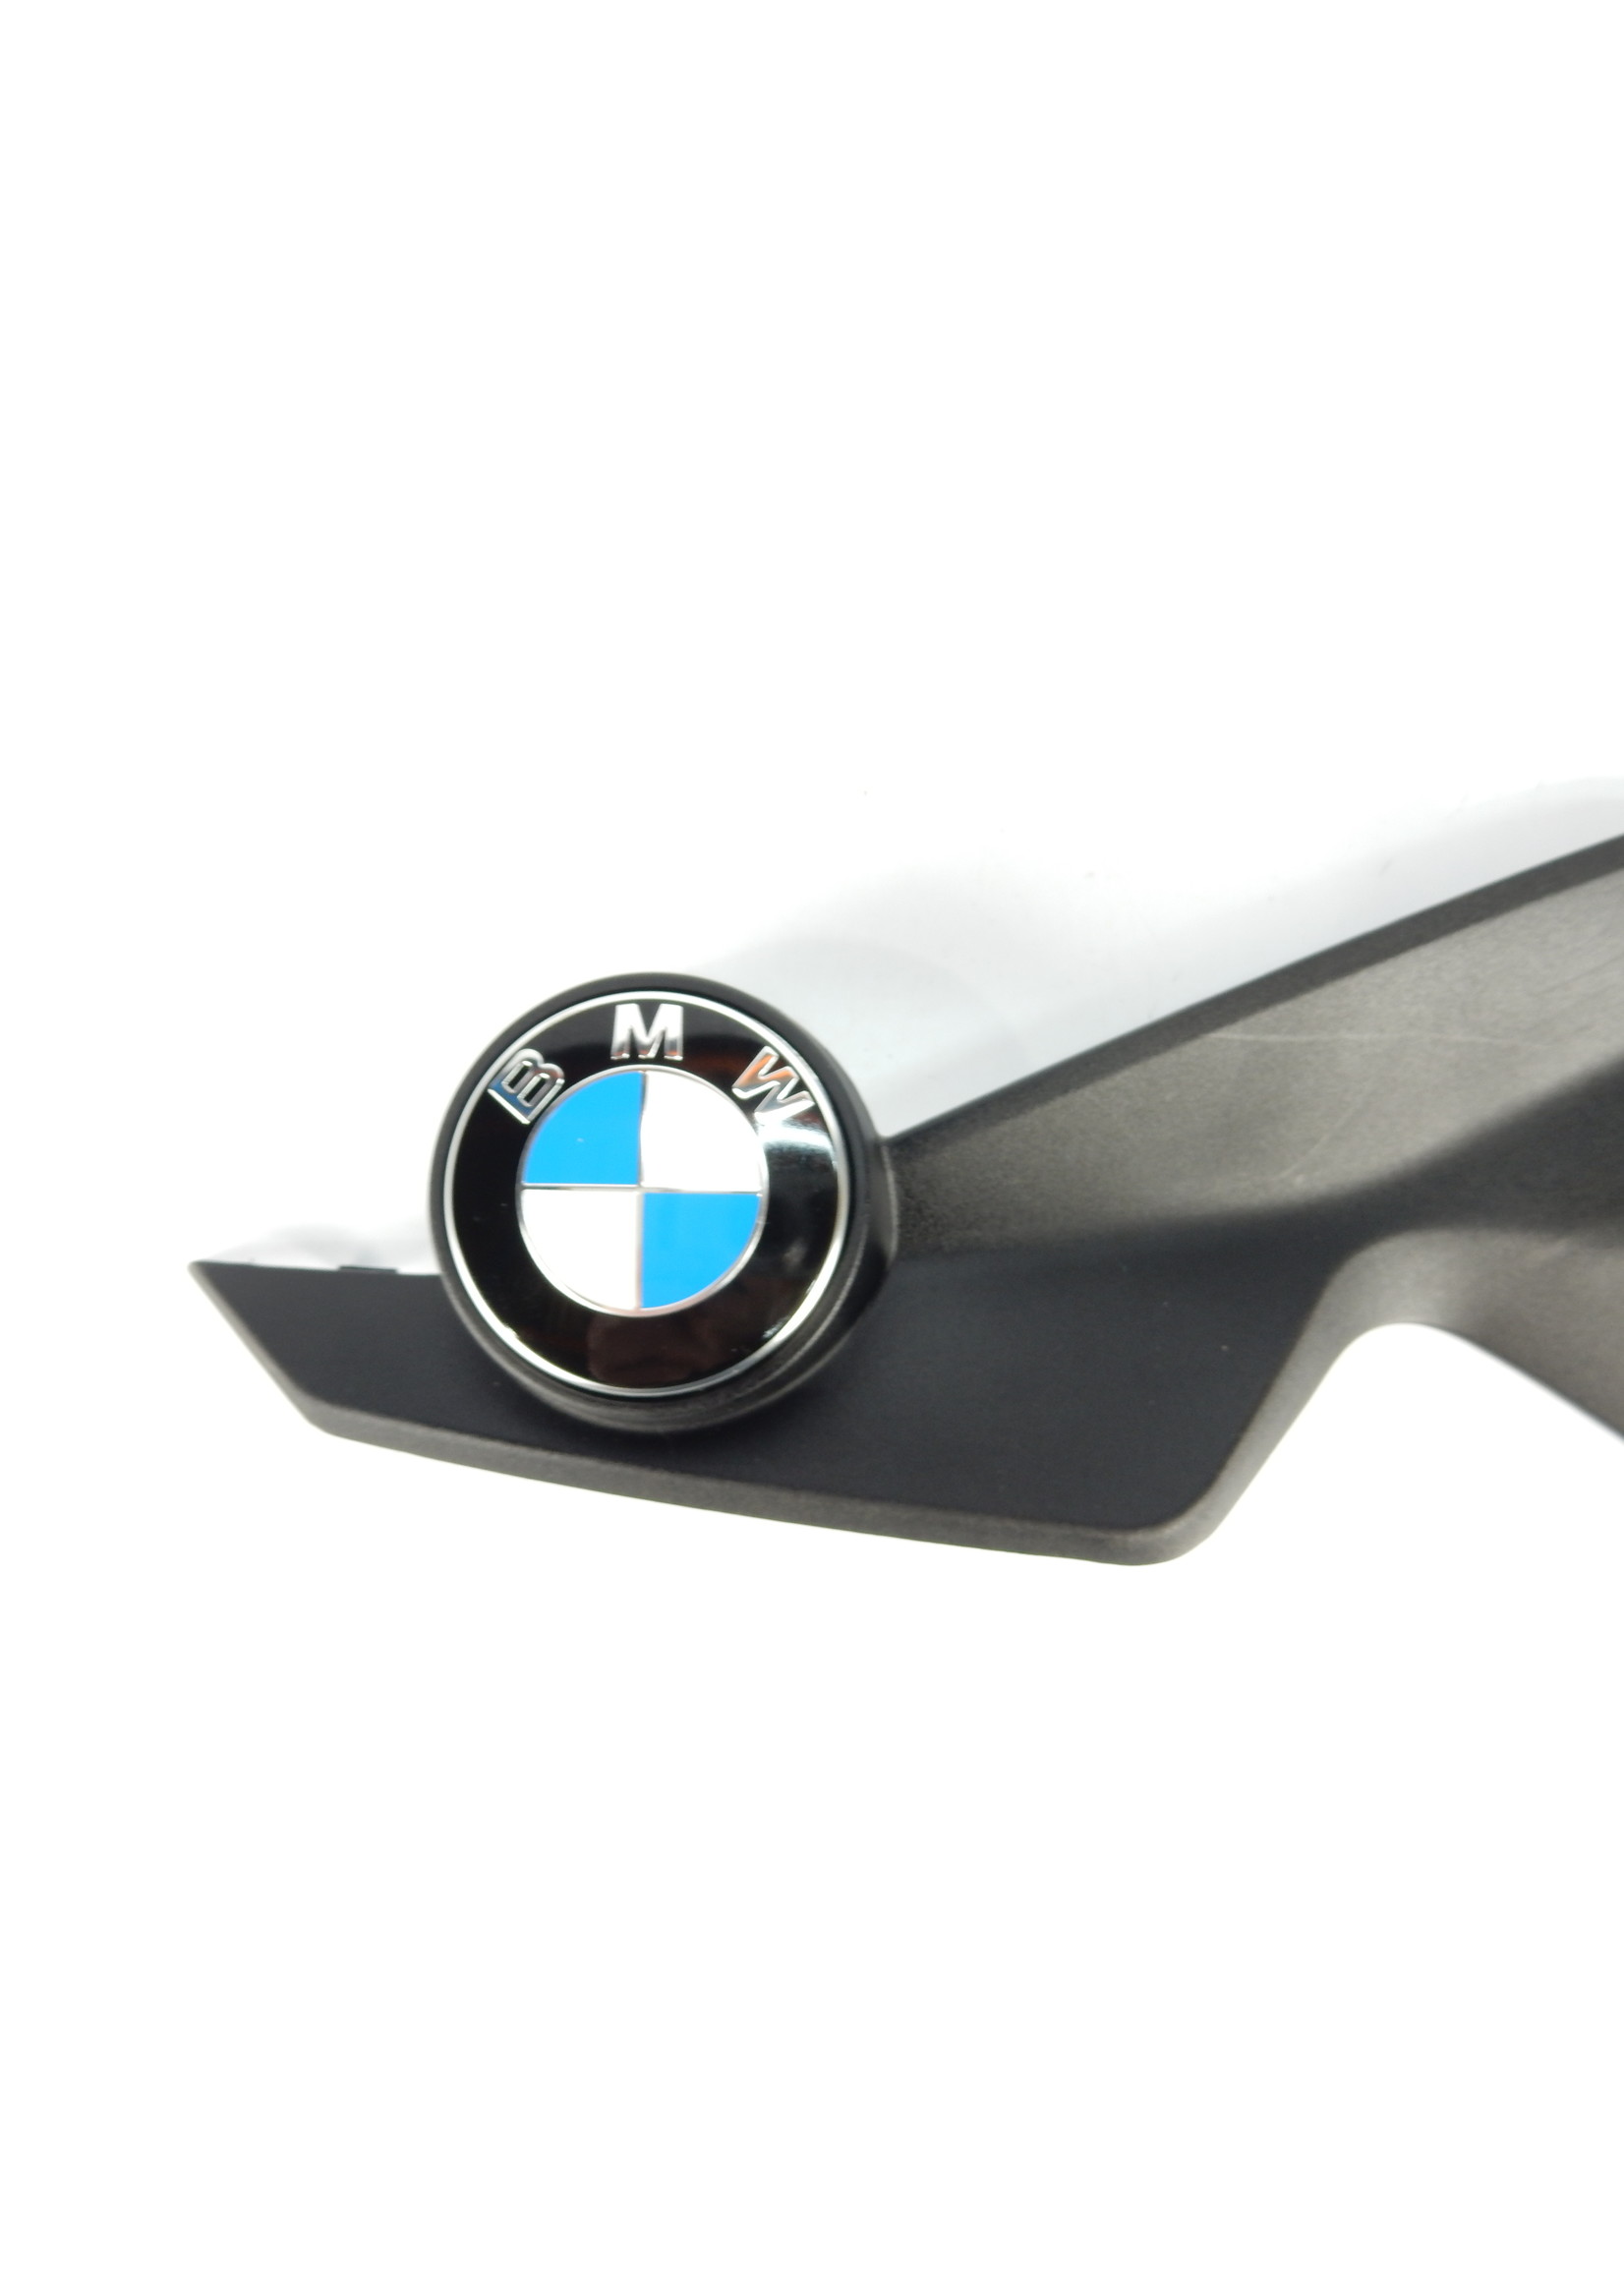 BMW BMW G 310 R Plaquette bevestiging, links / Naafdop met chroomrand BMW / 46638556771 / 36136850834